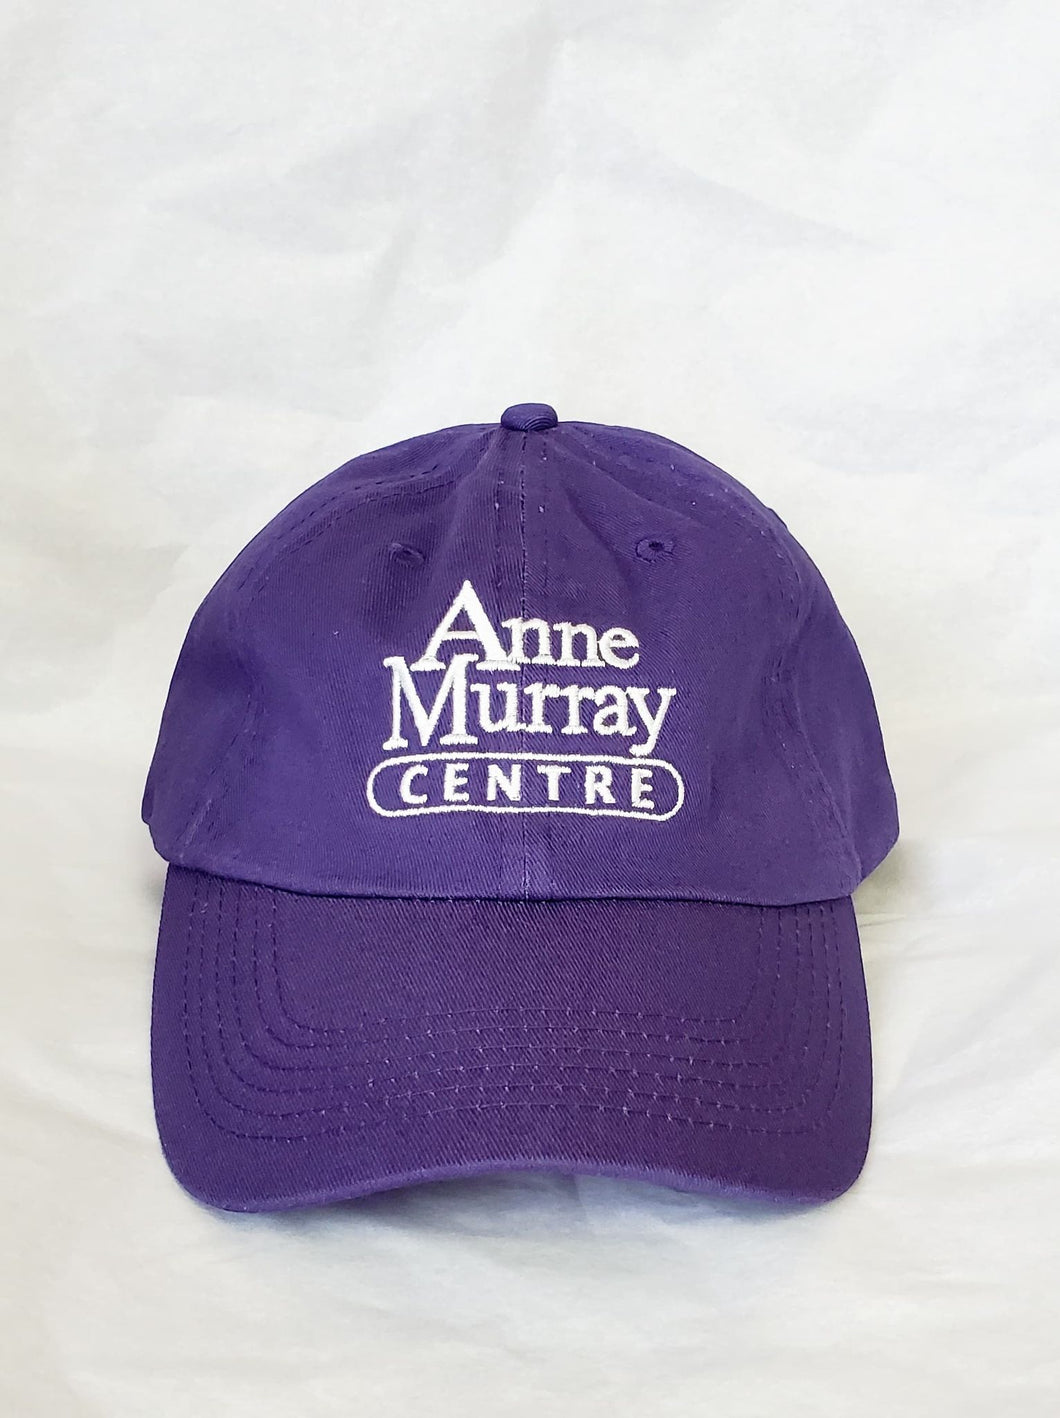 Anne Murray Centre Baseball Cap